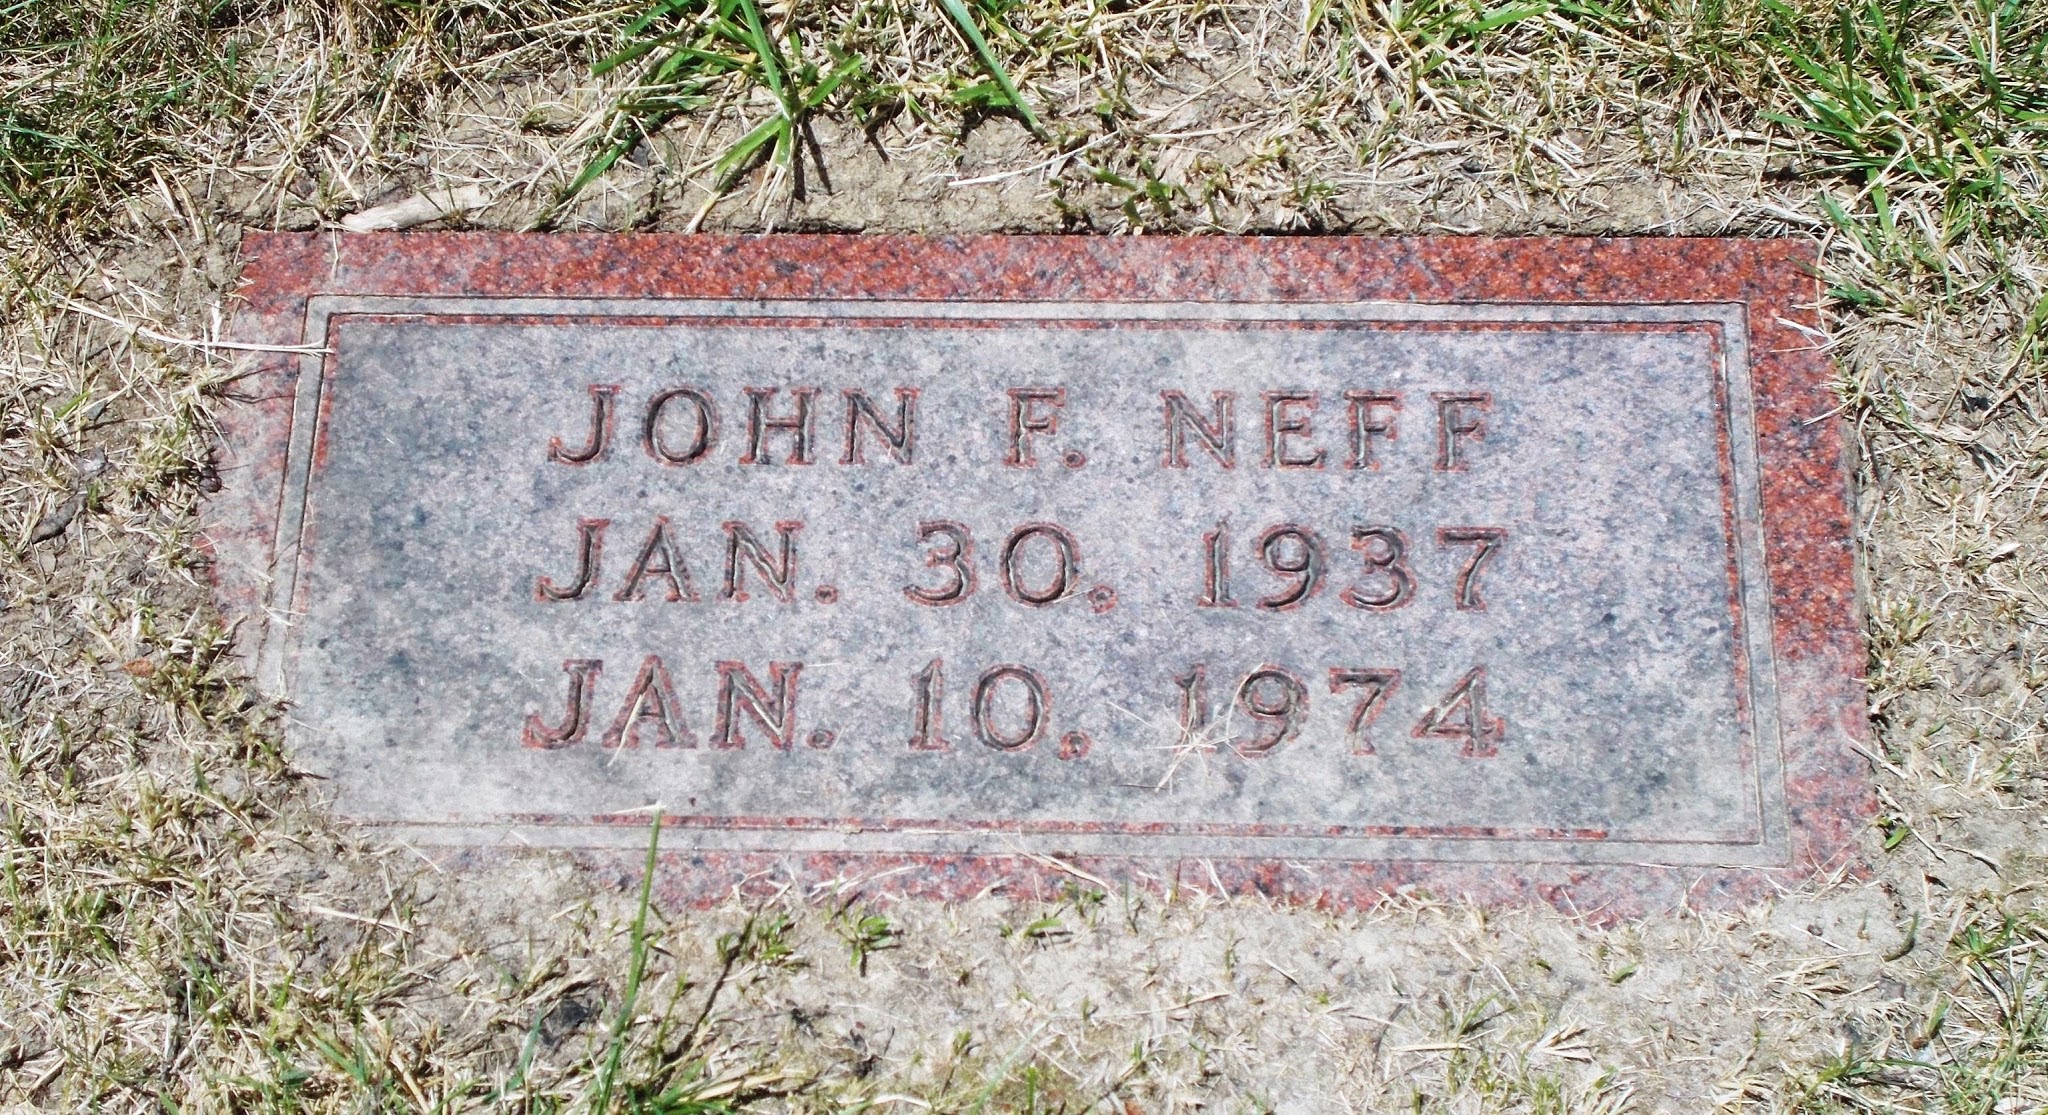 John F Neff